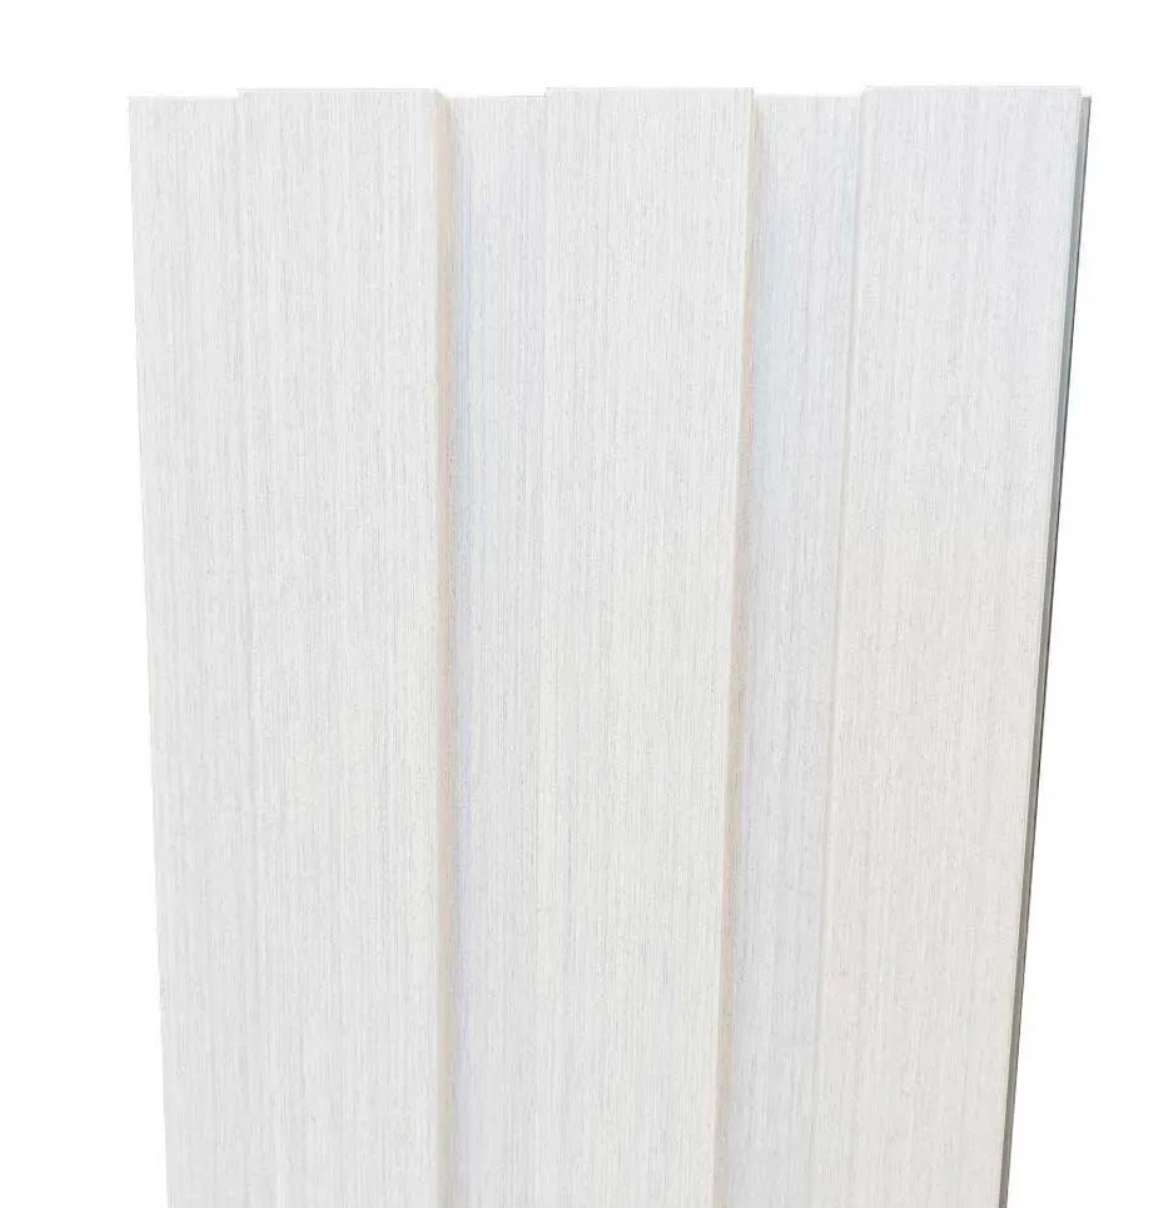 PVC Thermo-Slat Wall Panel - Charcoal White